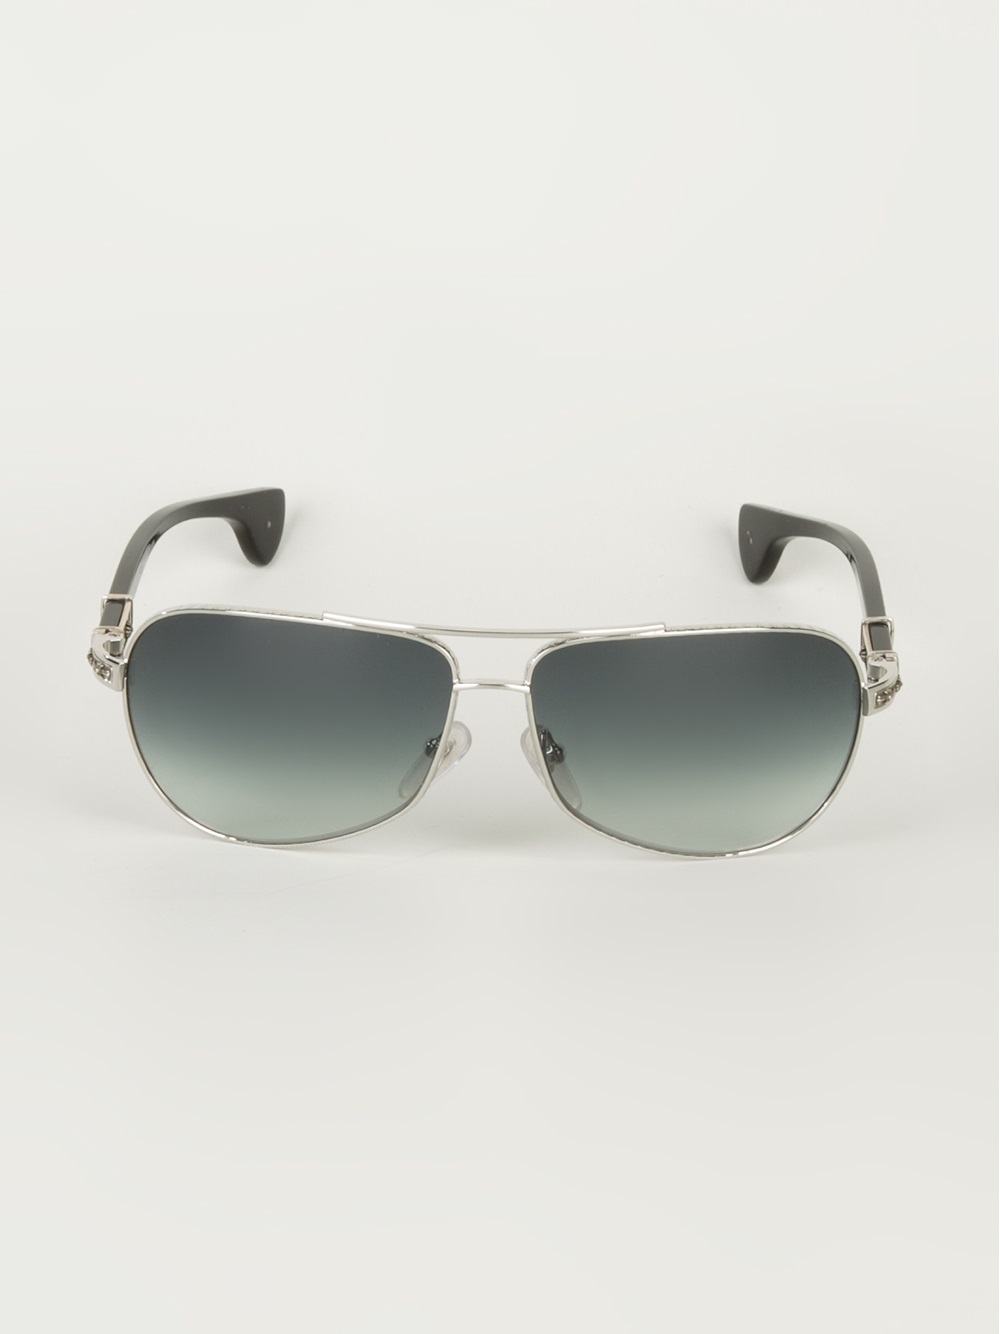 Chrome Hearts Grand Beast Sunglasses in Metallic (Black) for Men - Lyst